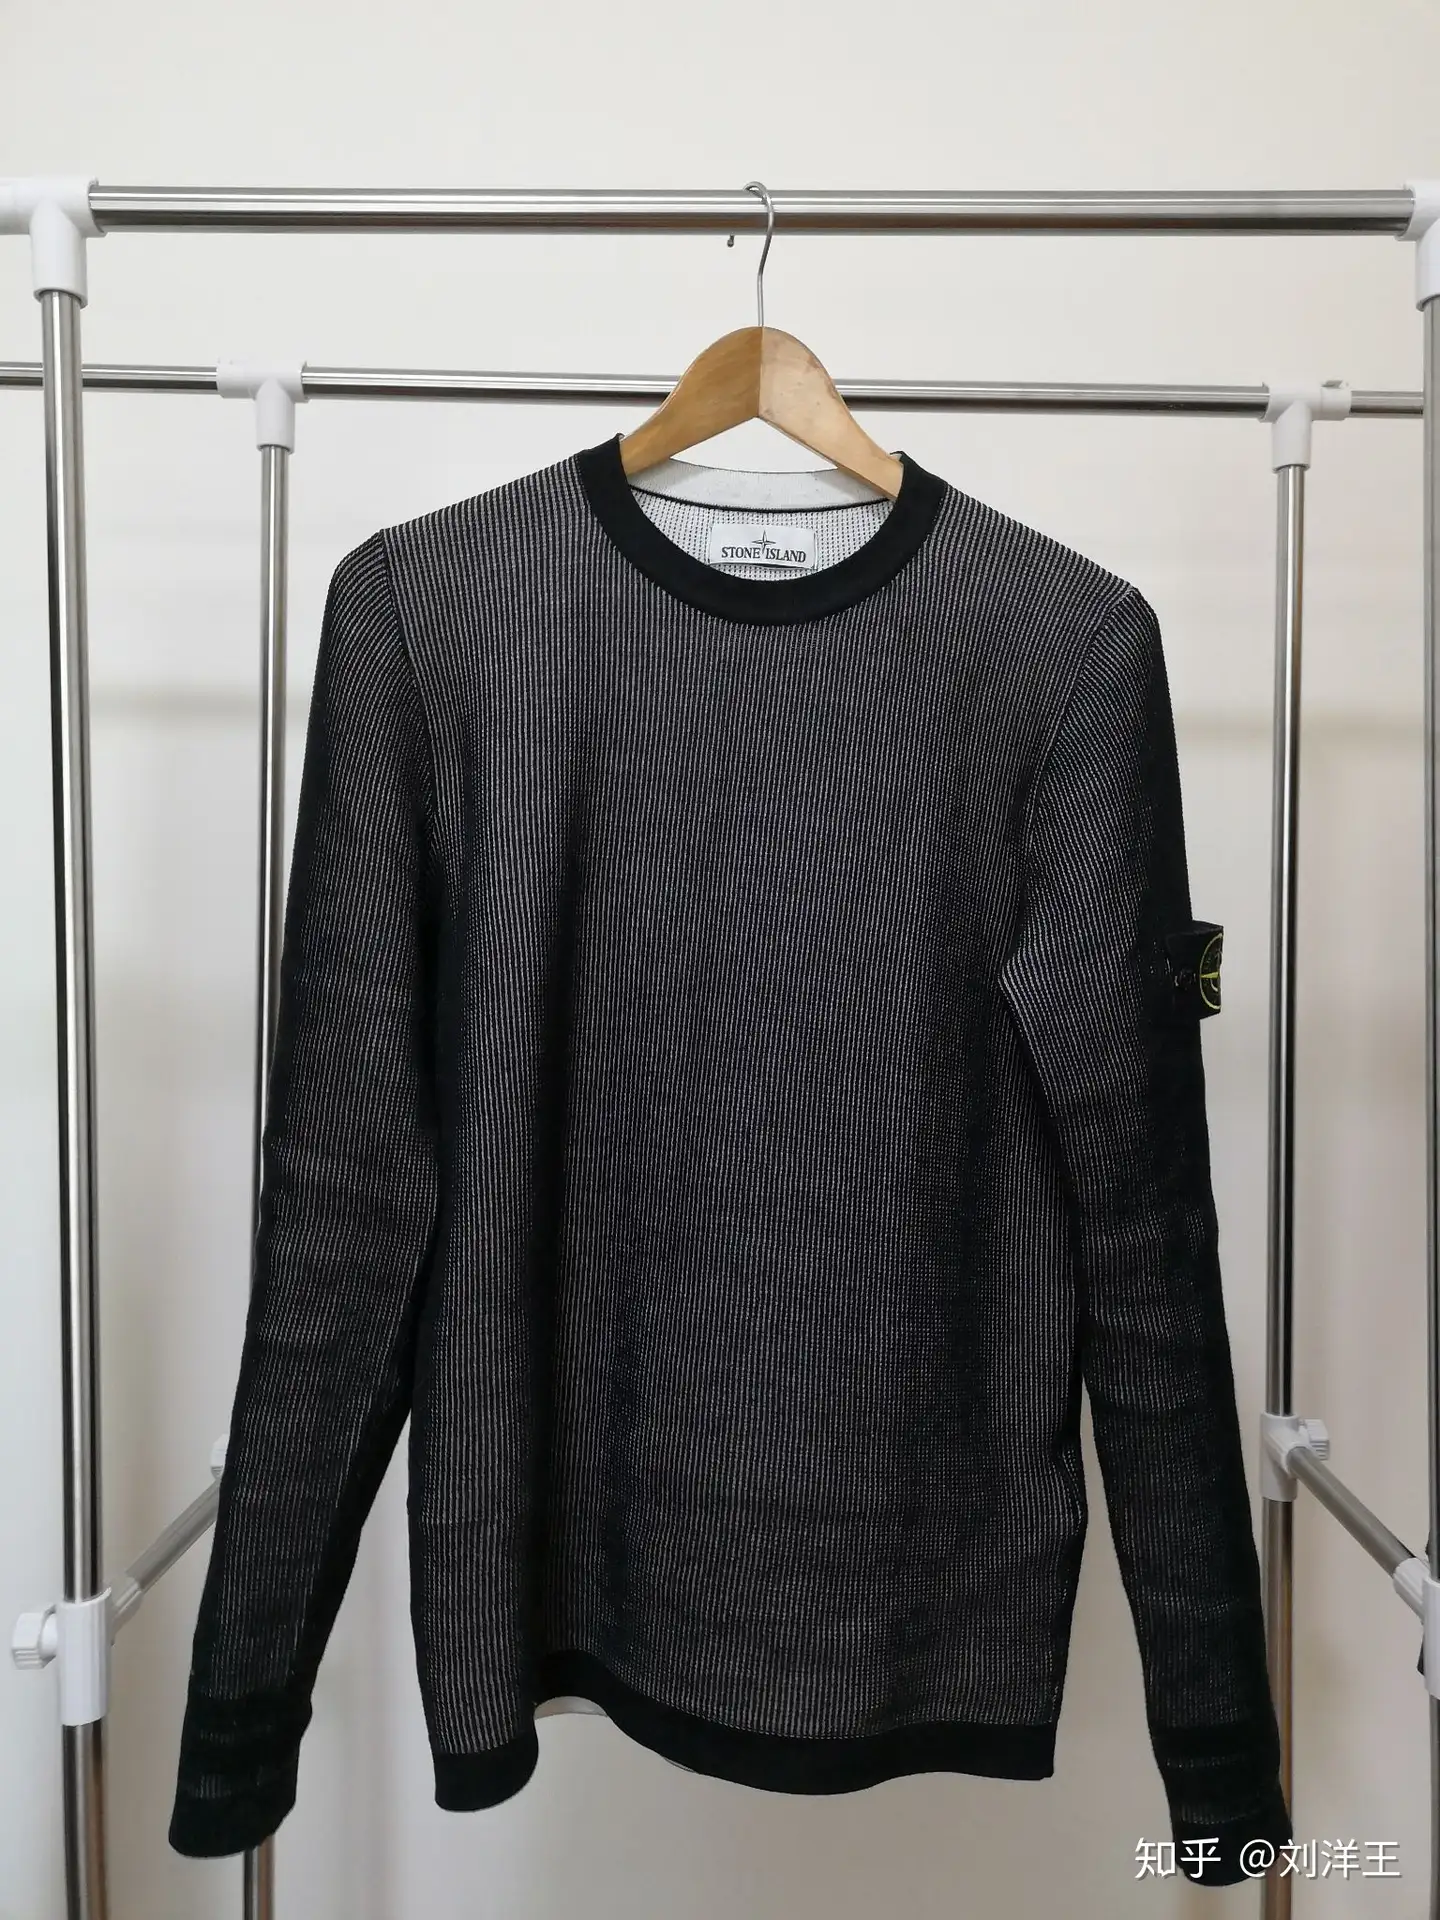 STONE ISLAND评测系列NO.8 SS19 的double knit sweater - 知乎